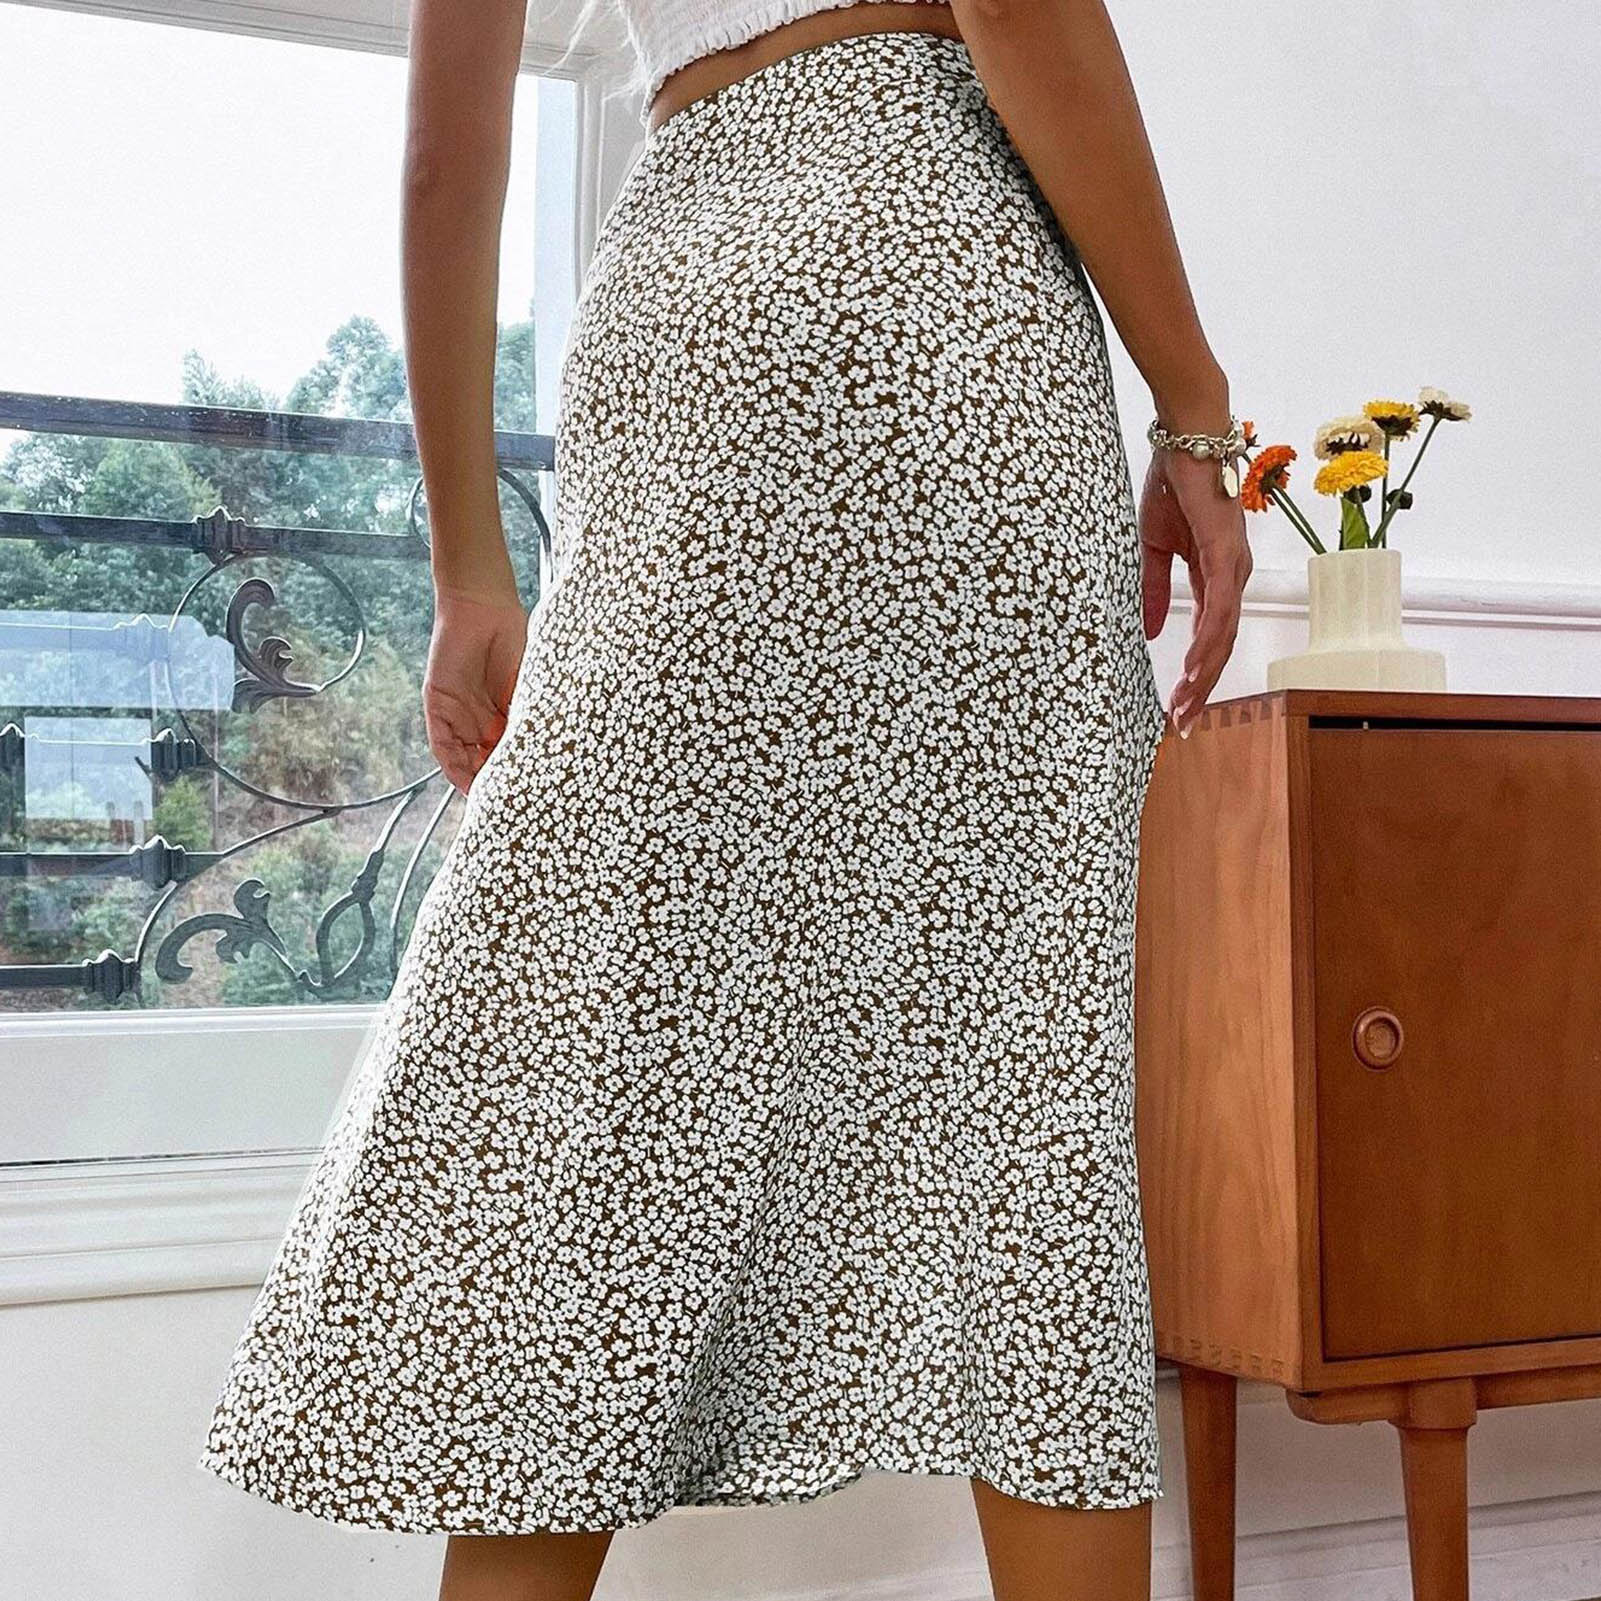 Women Split Thigh Skirt Soft Casual Fashionable Elegant Floral Print Skirt for Dating Shopping Light Brown L - image 3 of 5